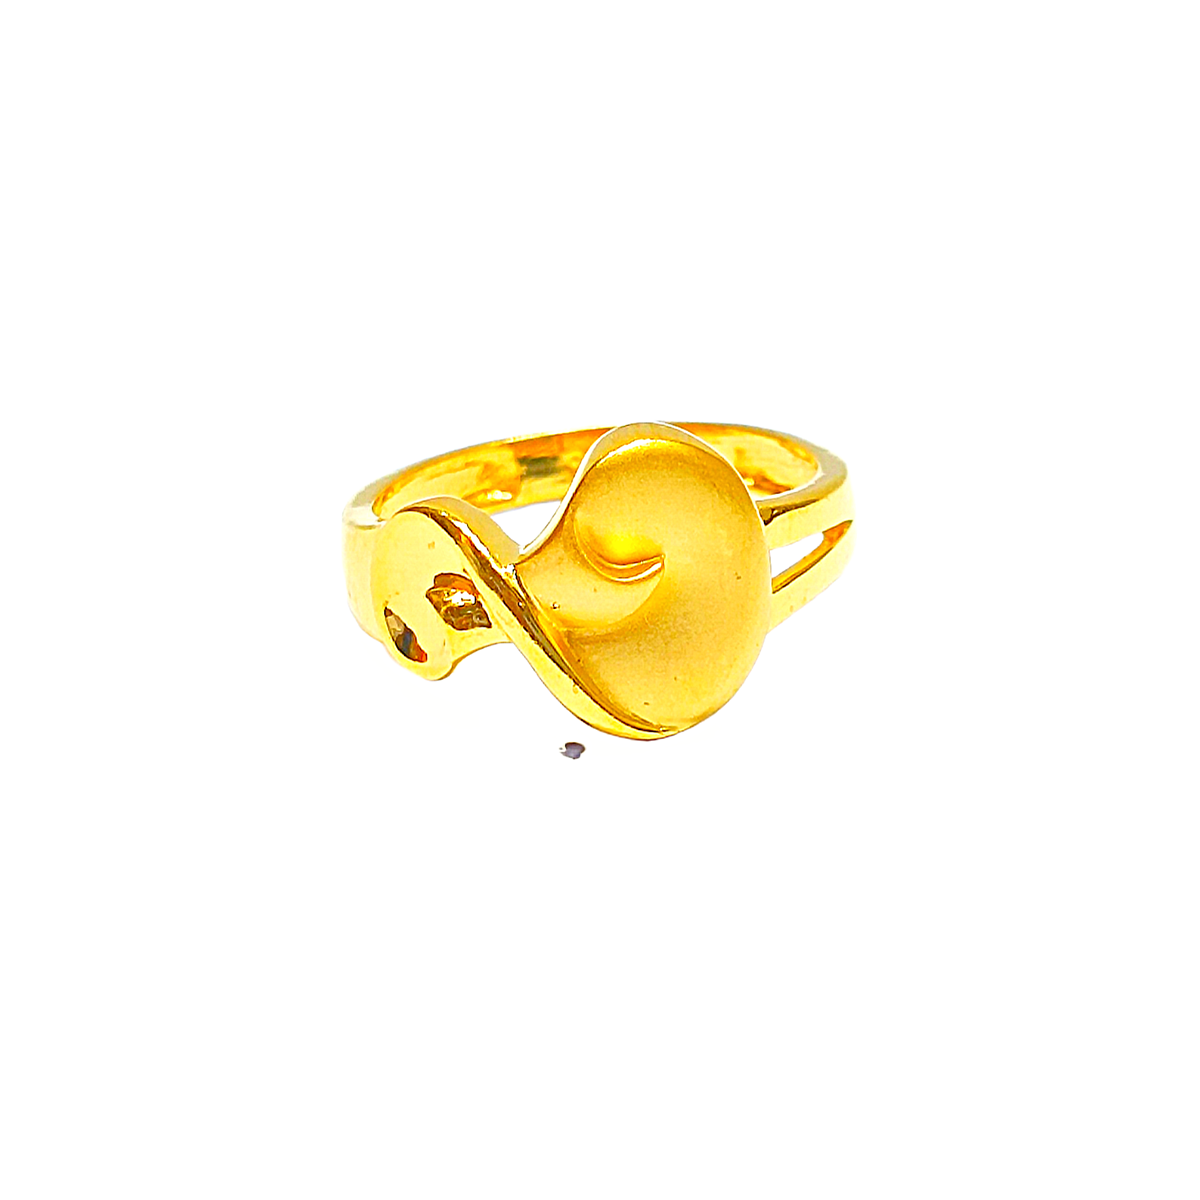 Didda gold ring